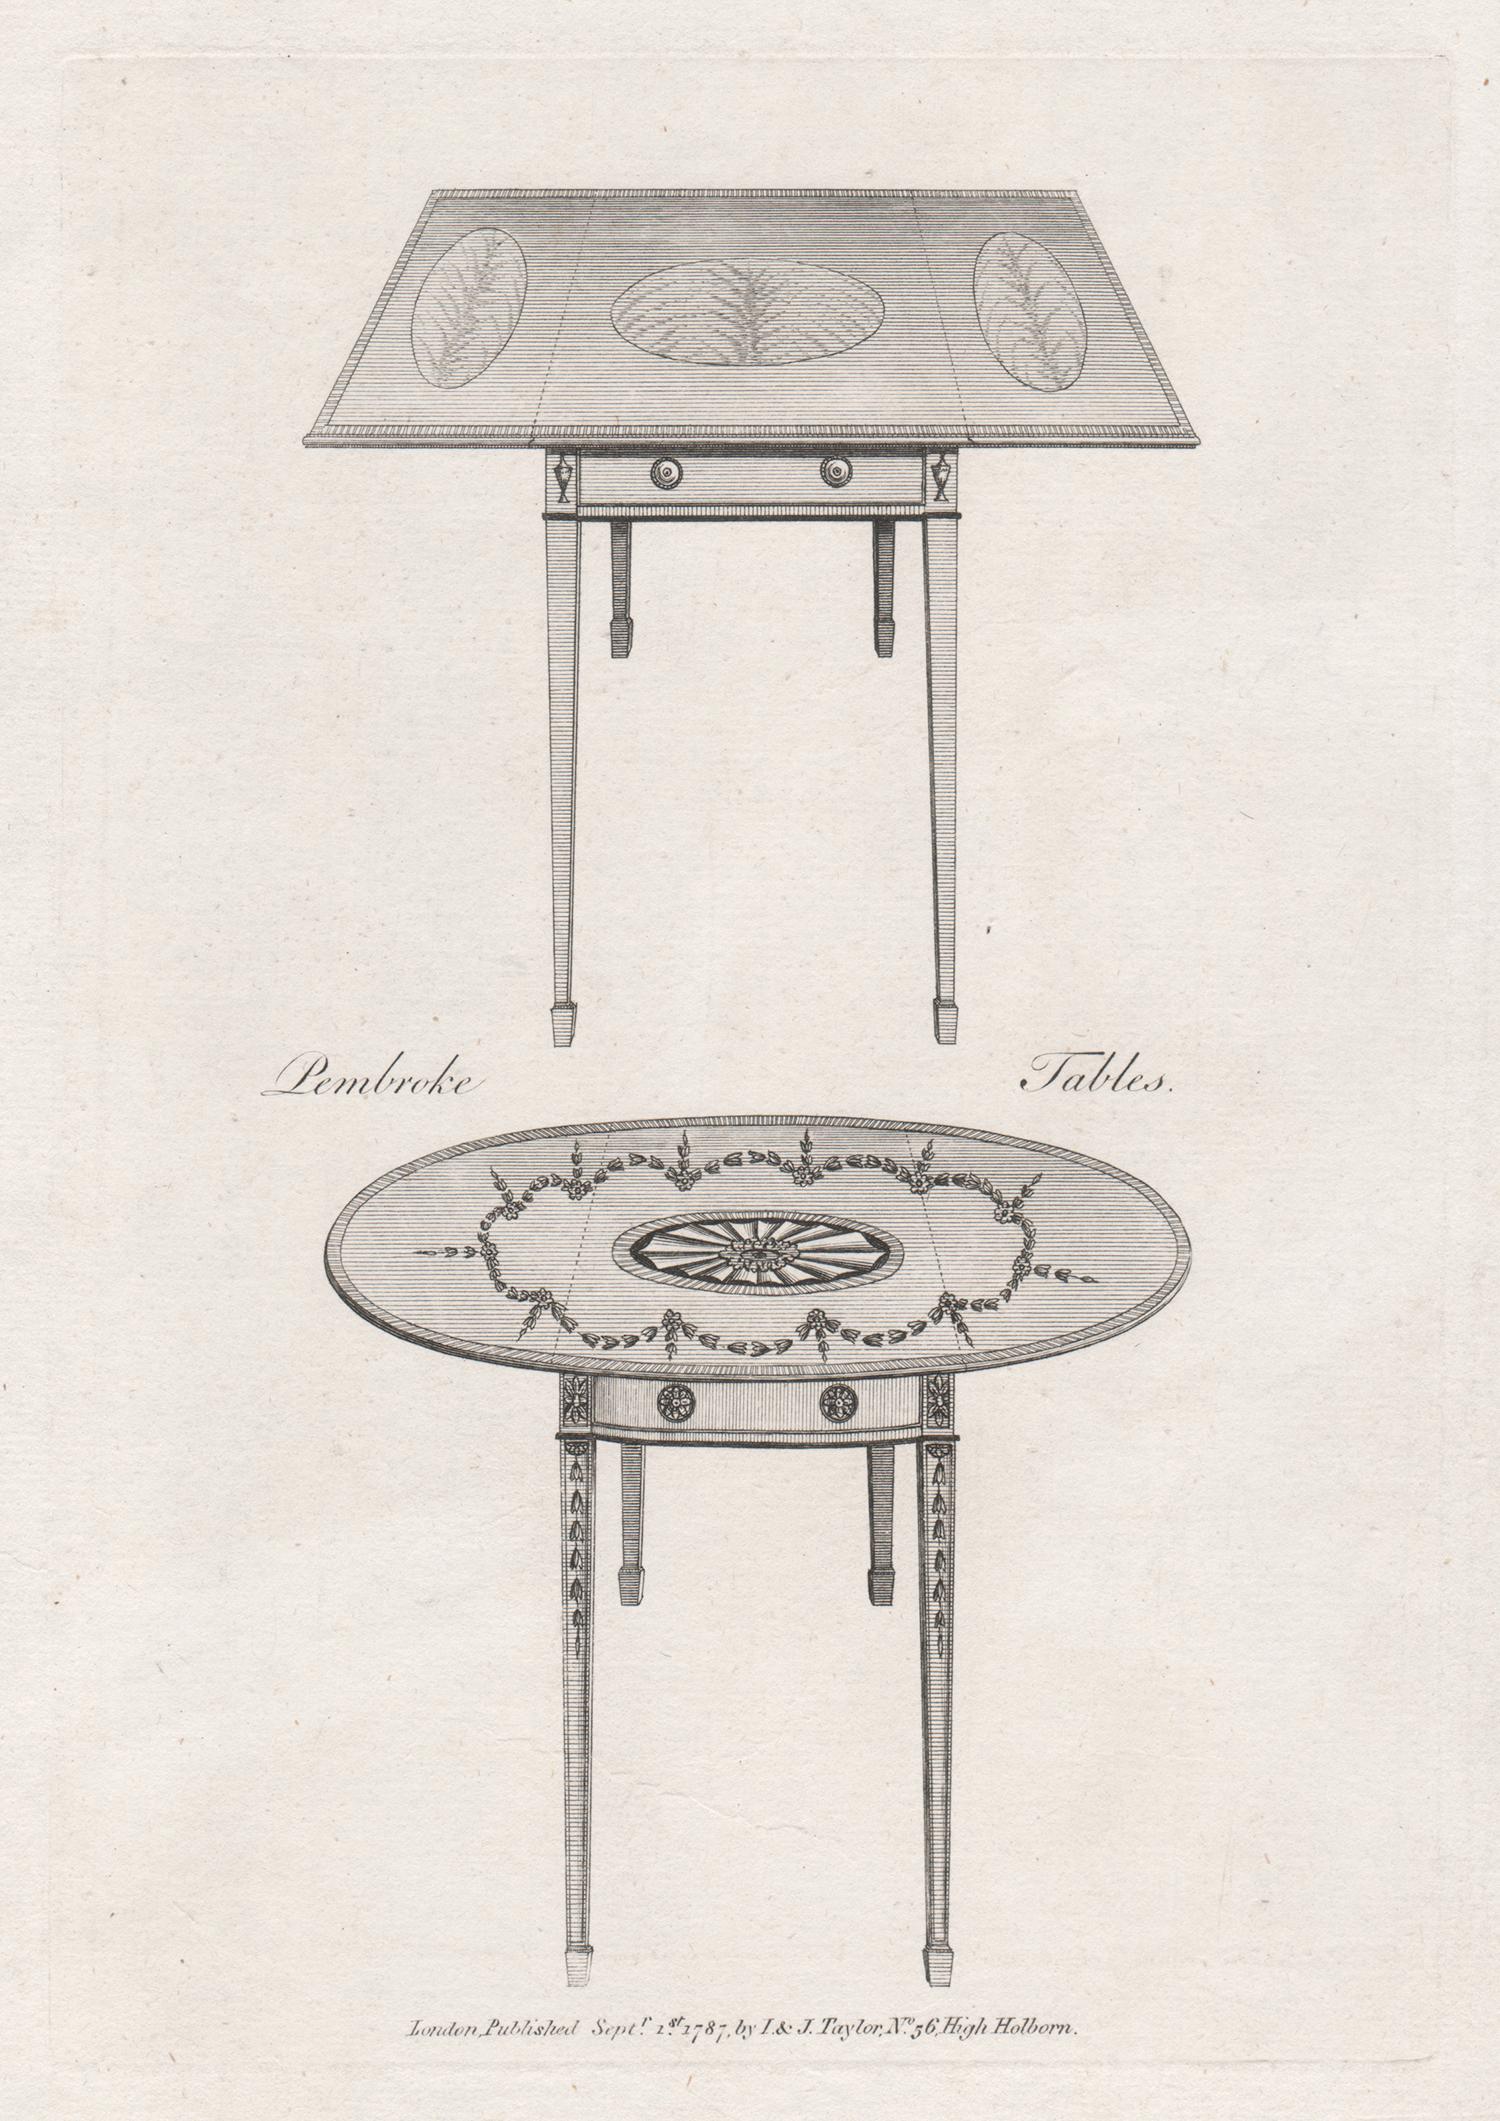 Pembroke Tables, Hepplewhite Georgian furniture design engraving